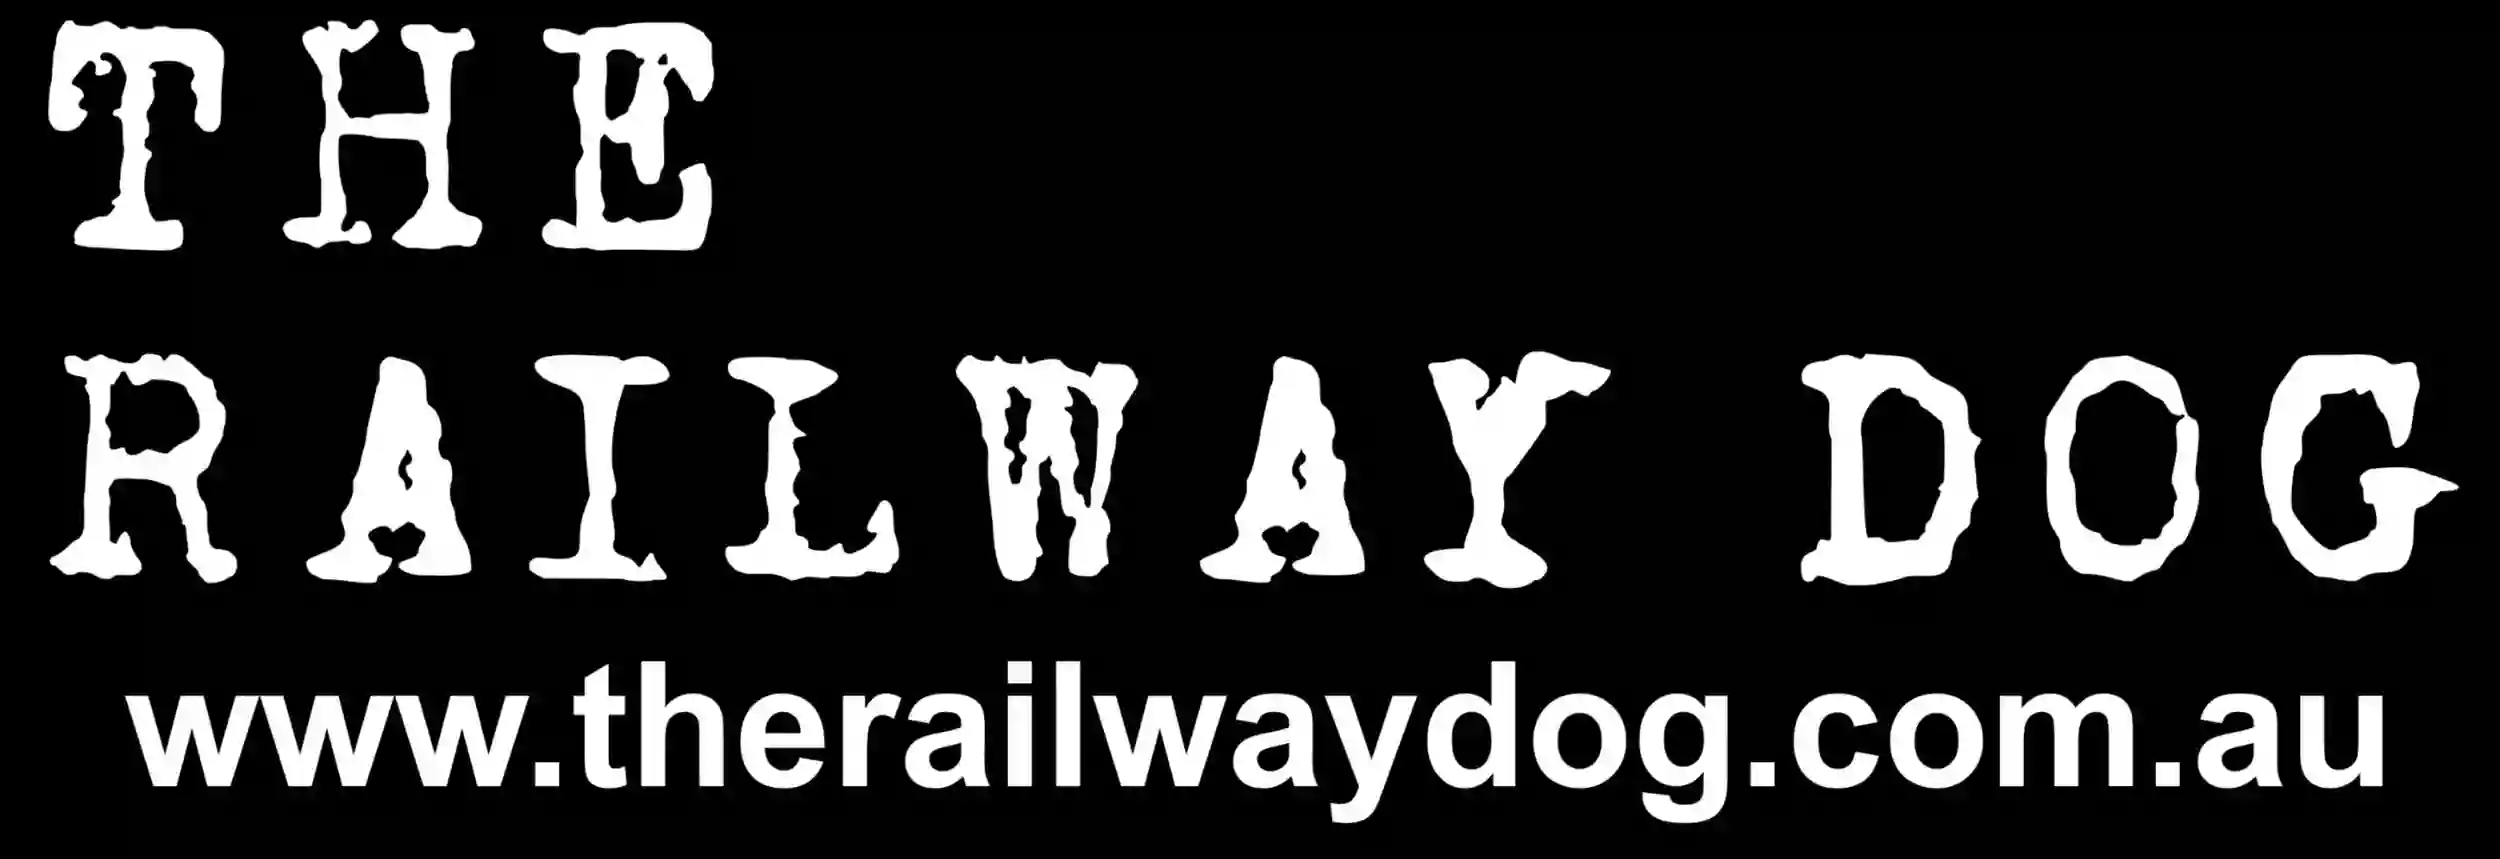 The Railway Dog